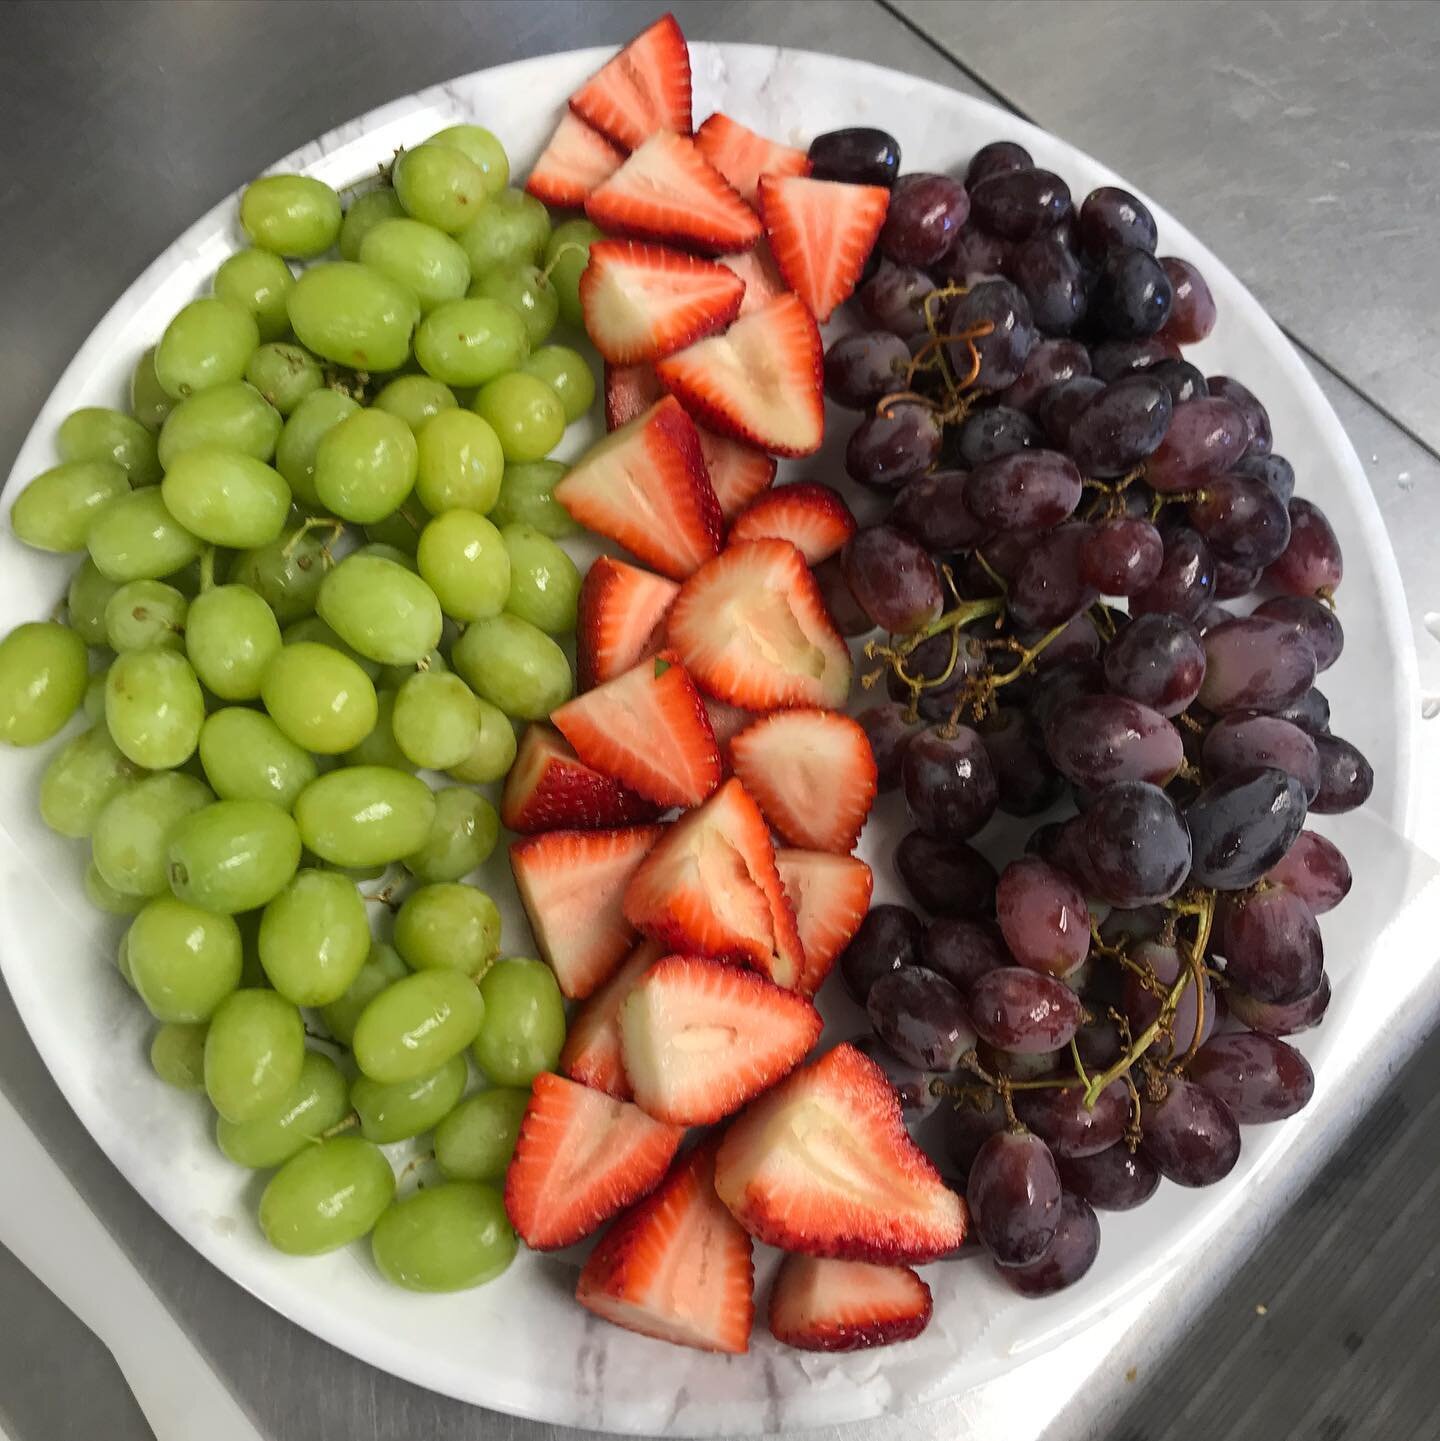 Fresh is best! 

#fruit #organic